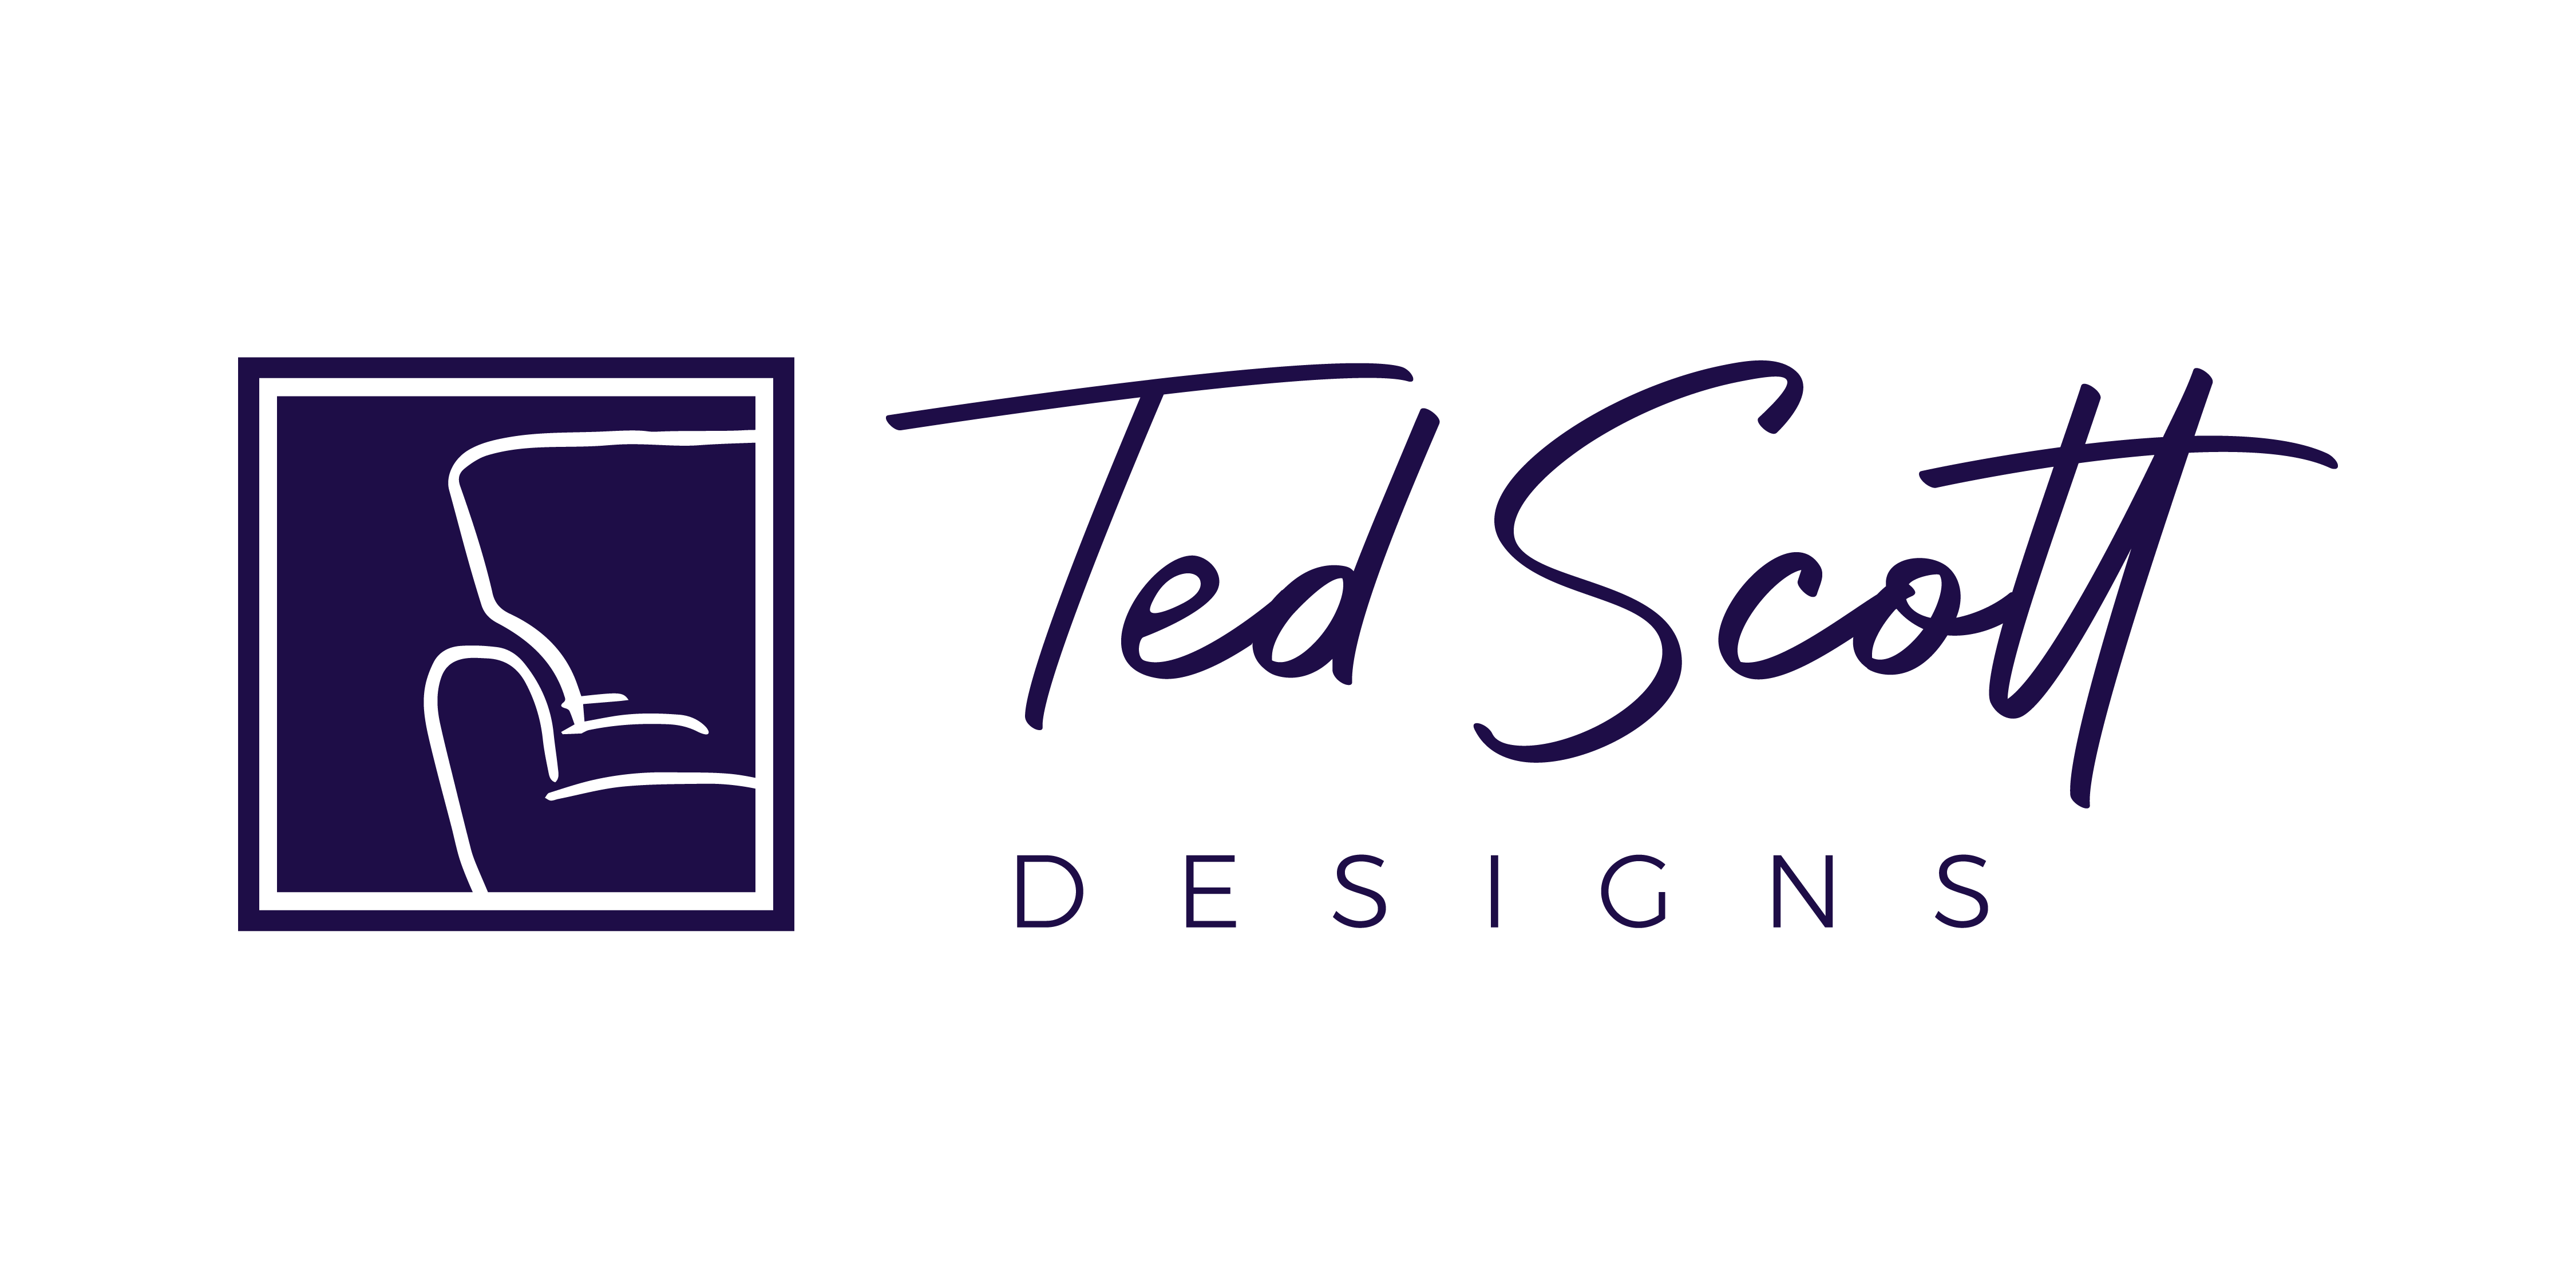 Ted Scott DESIGNS Logo